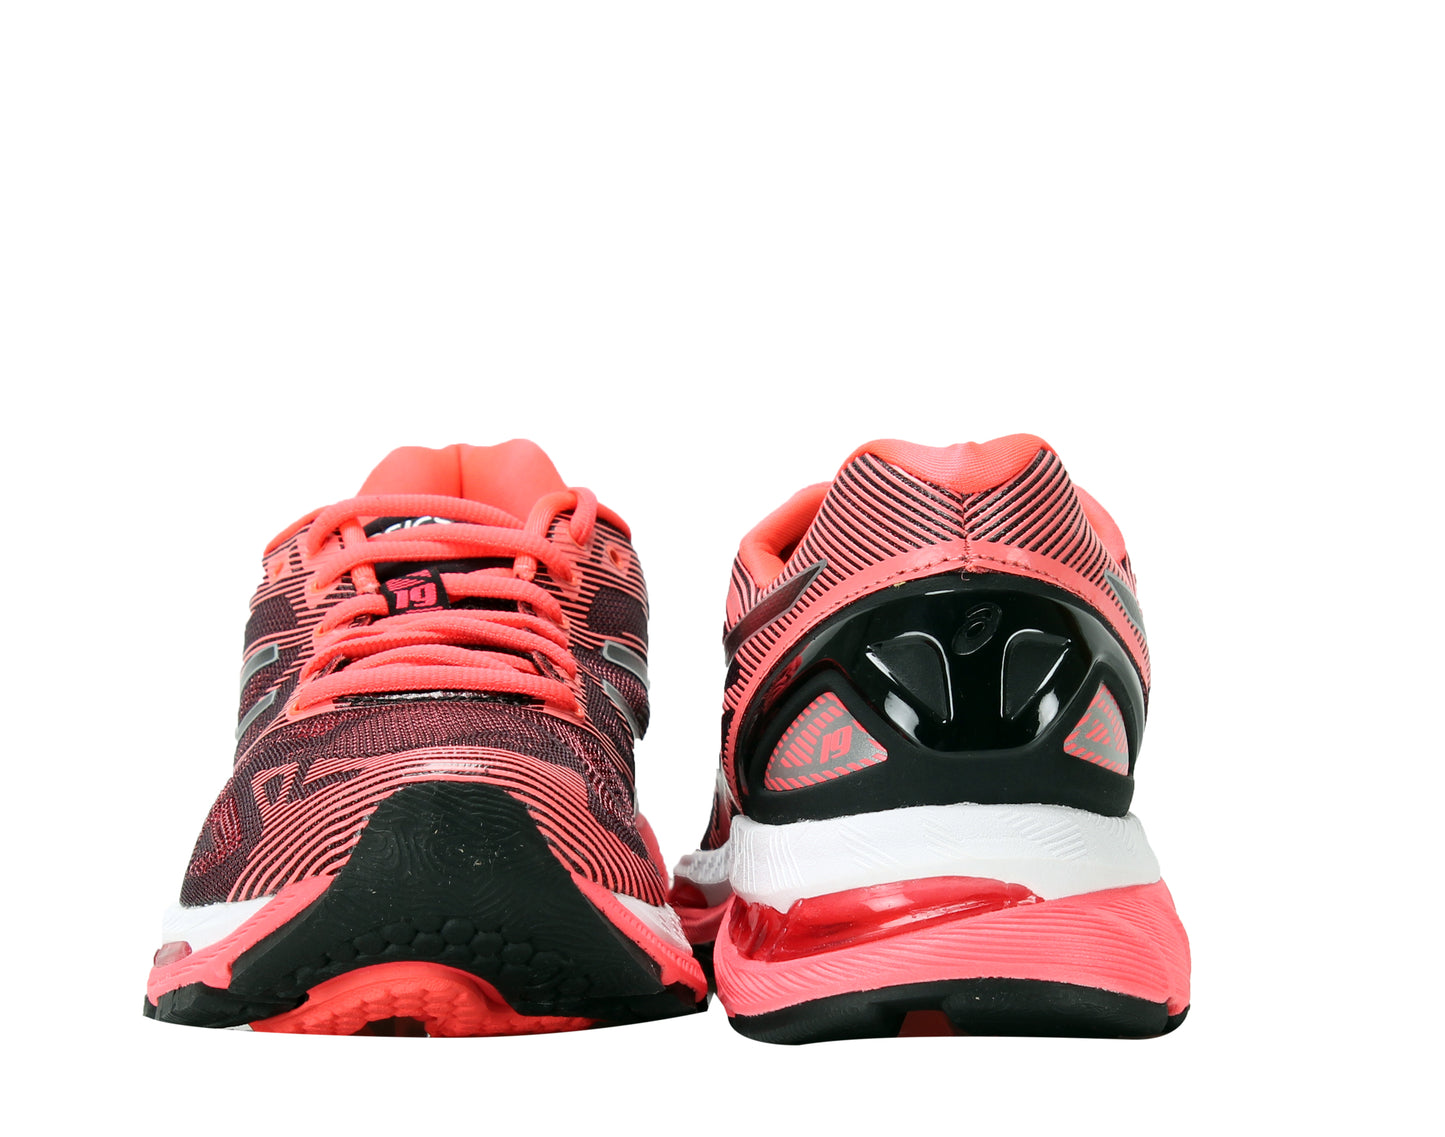 Asics Gel-Nimbus 19 Women's Running Shoes